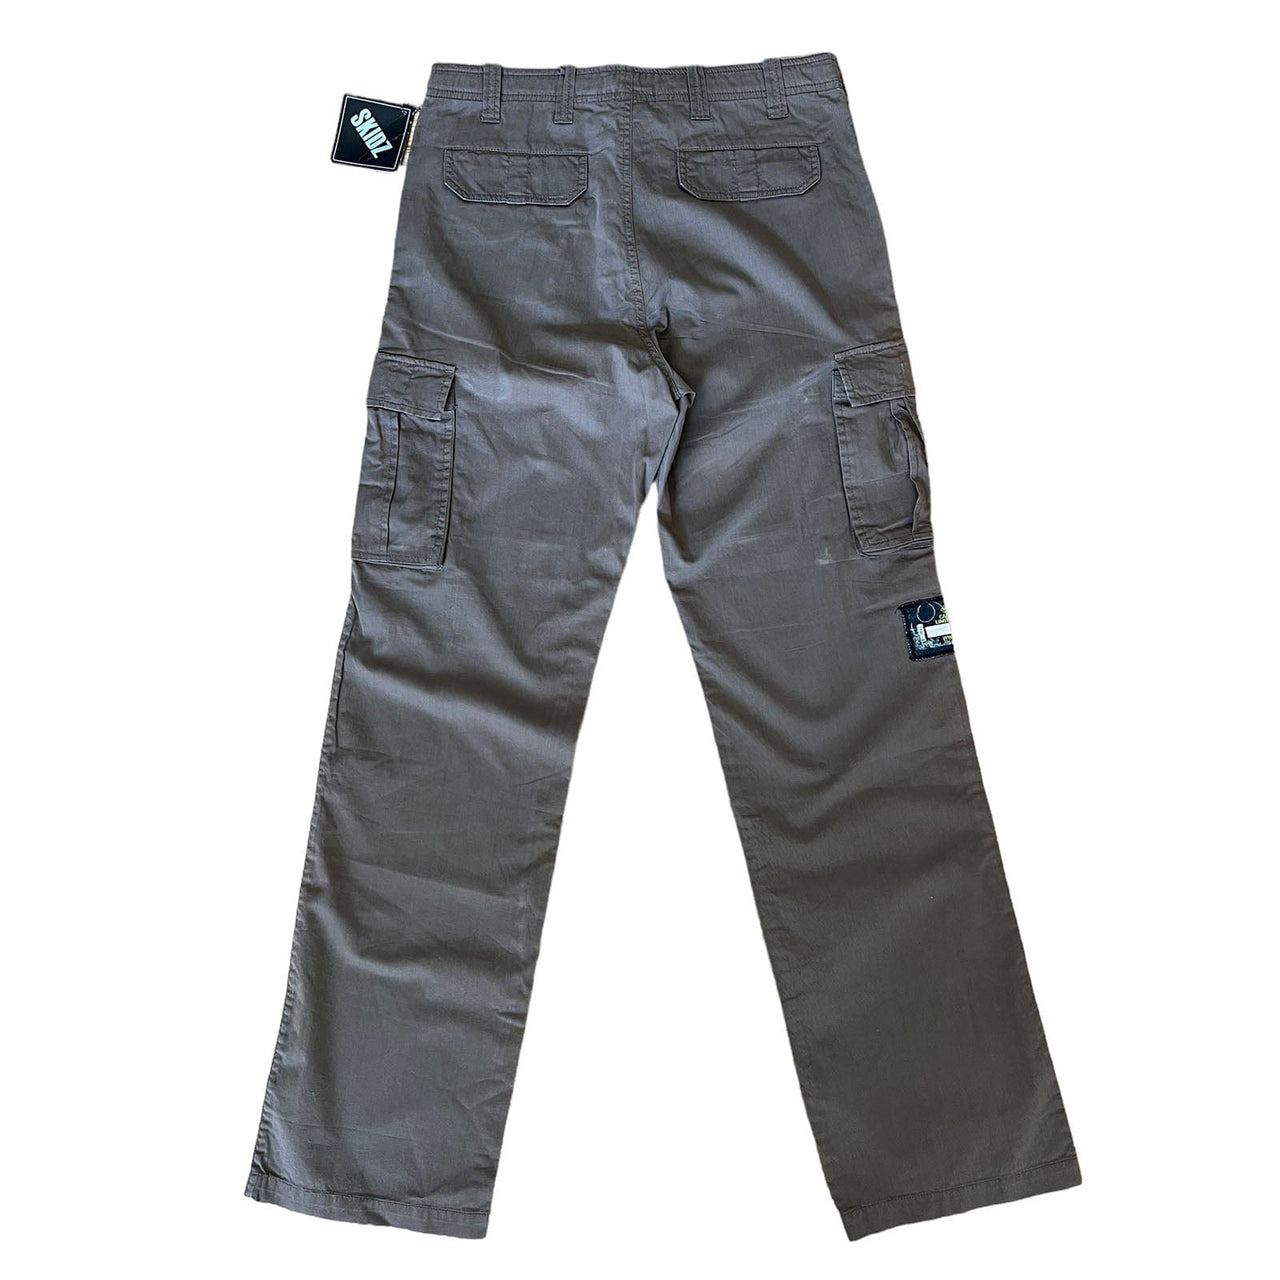 SKIDZ Pants Super Stash Cargo Pants - 2007 CC Brown